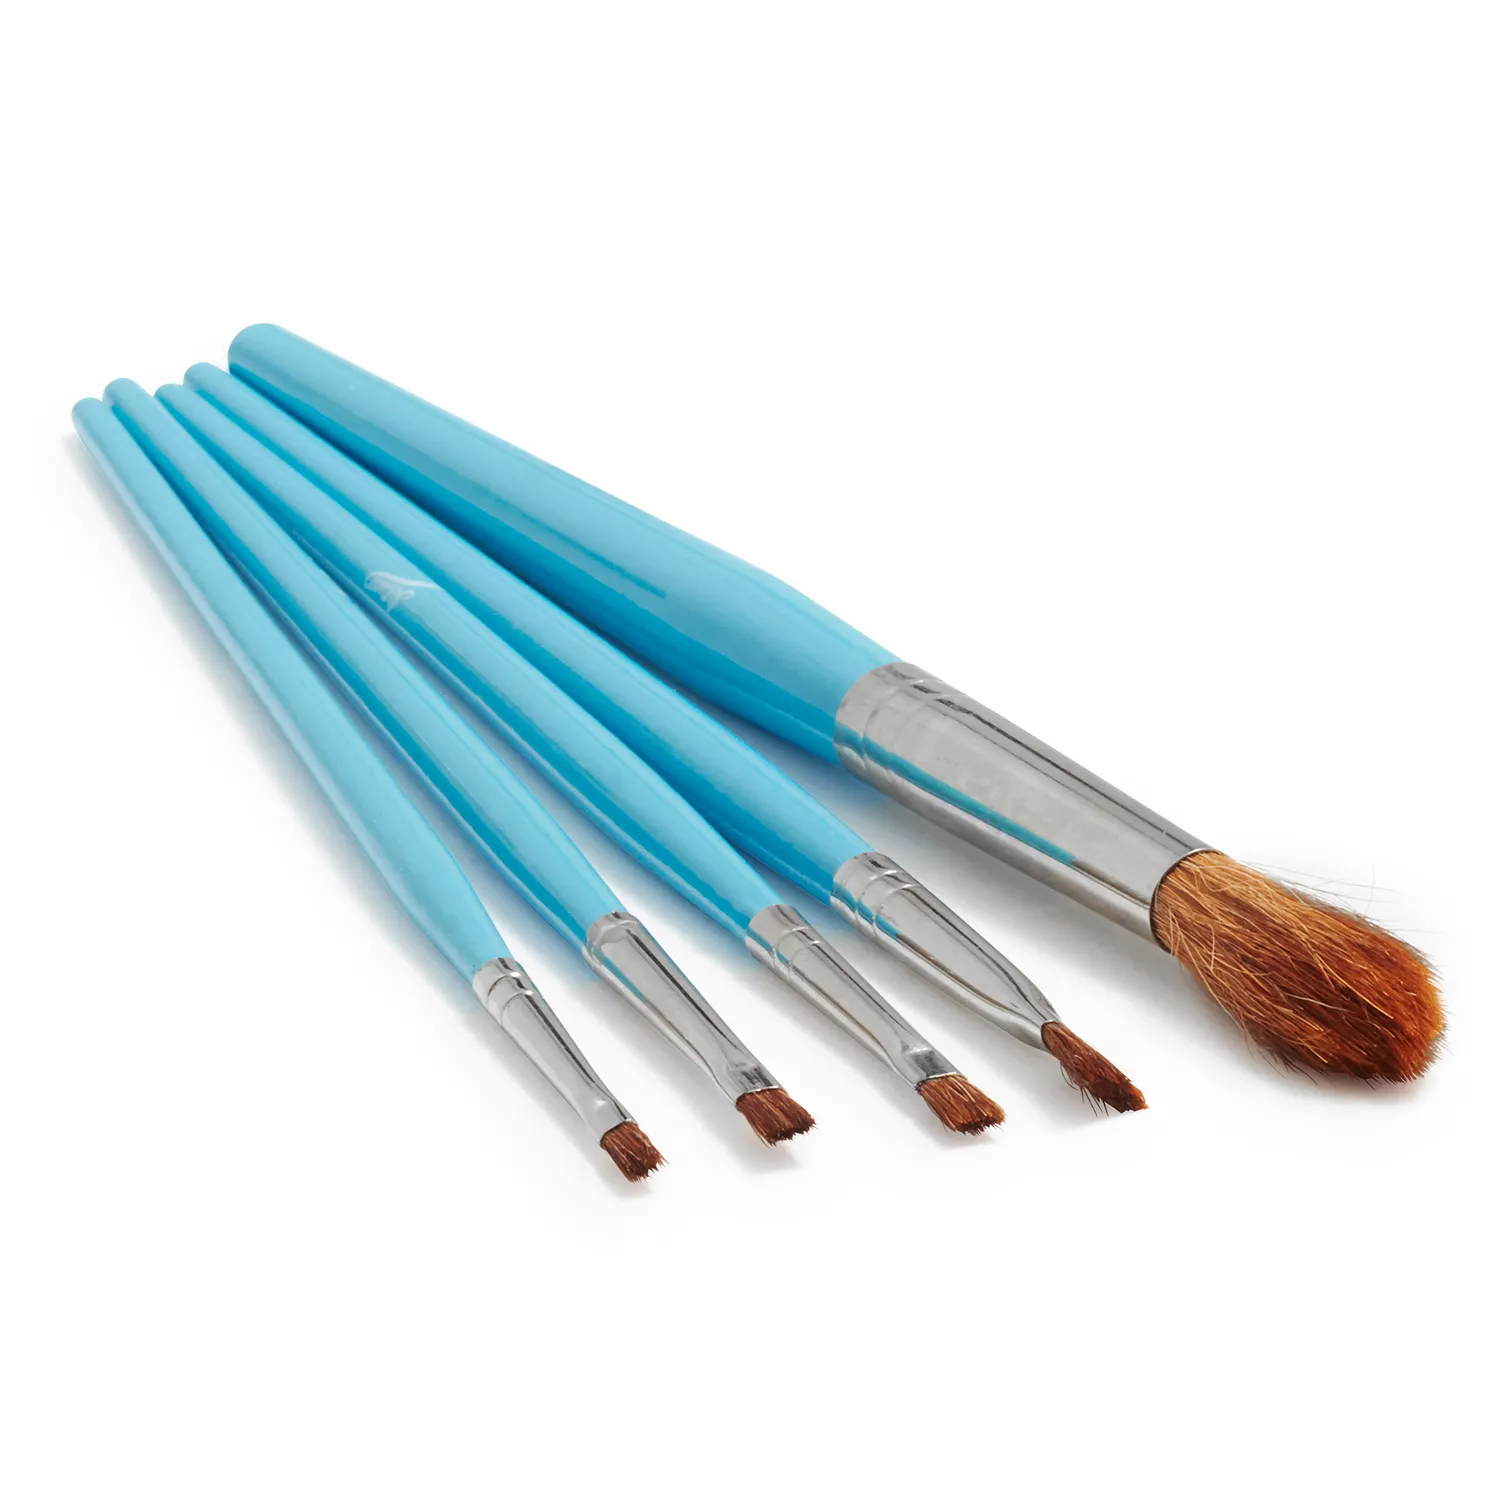 Wilton 5-Piece Decorating Brush Set